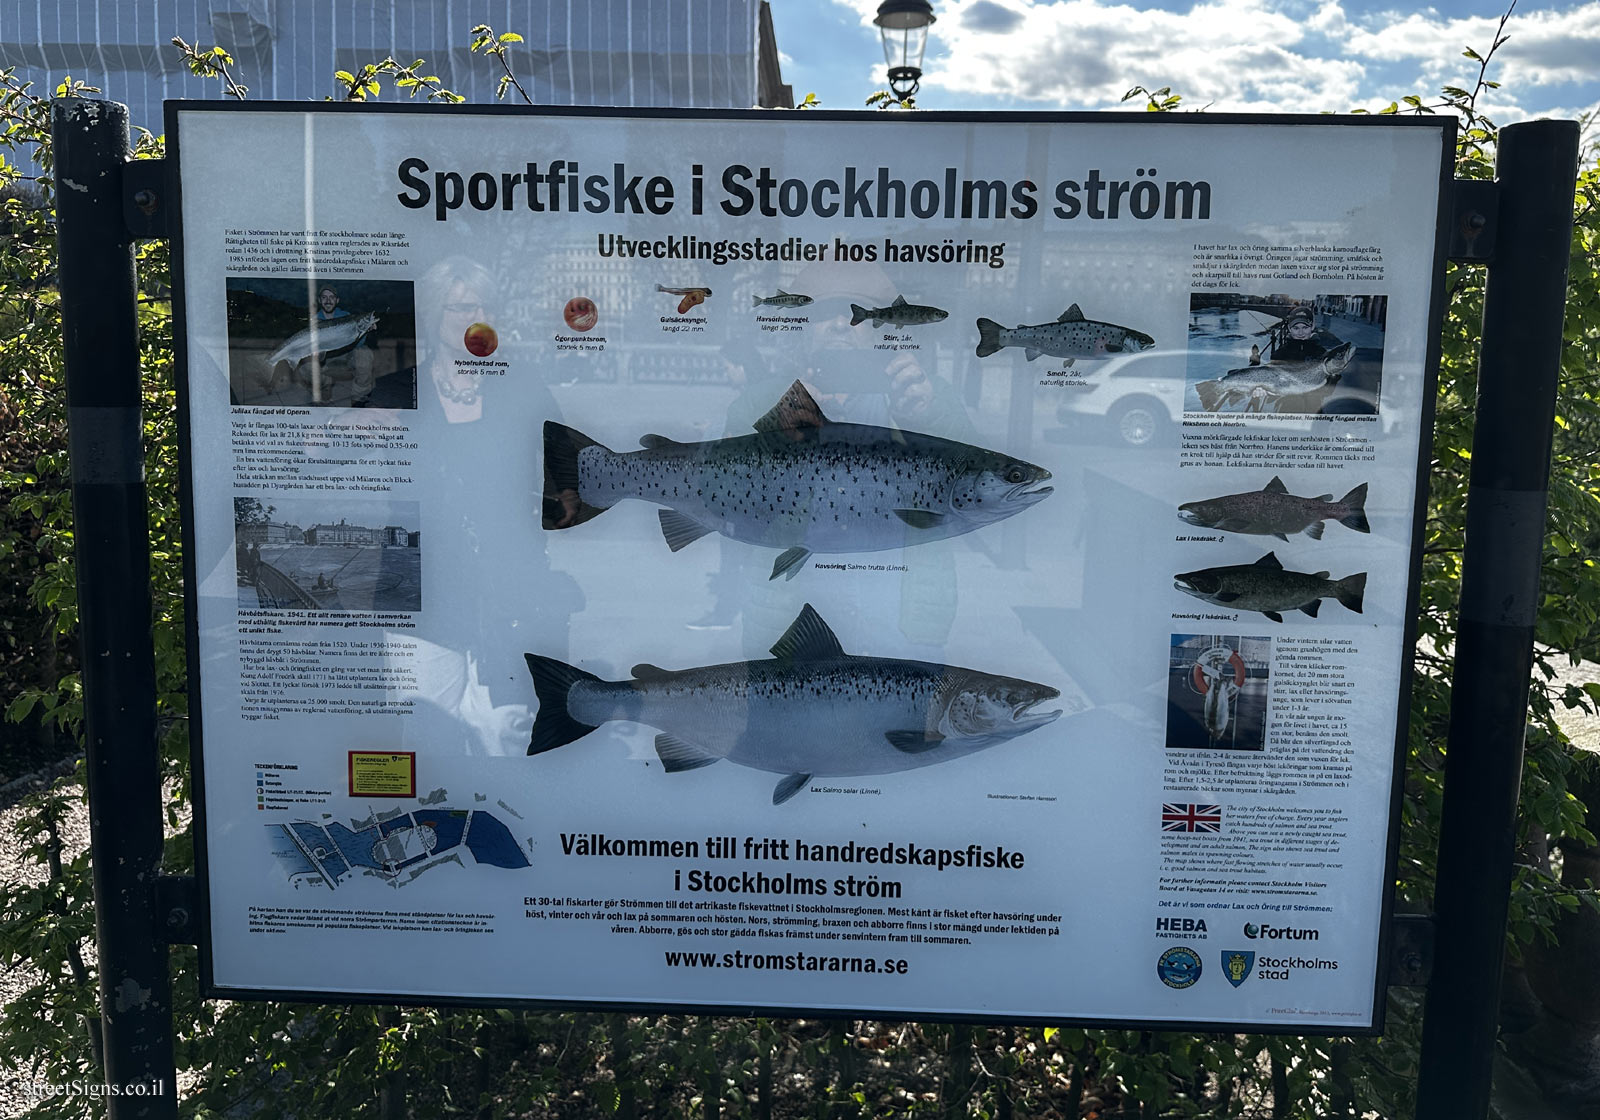 Stockholm - Sport fishing in Stockholm’s stream